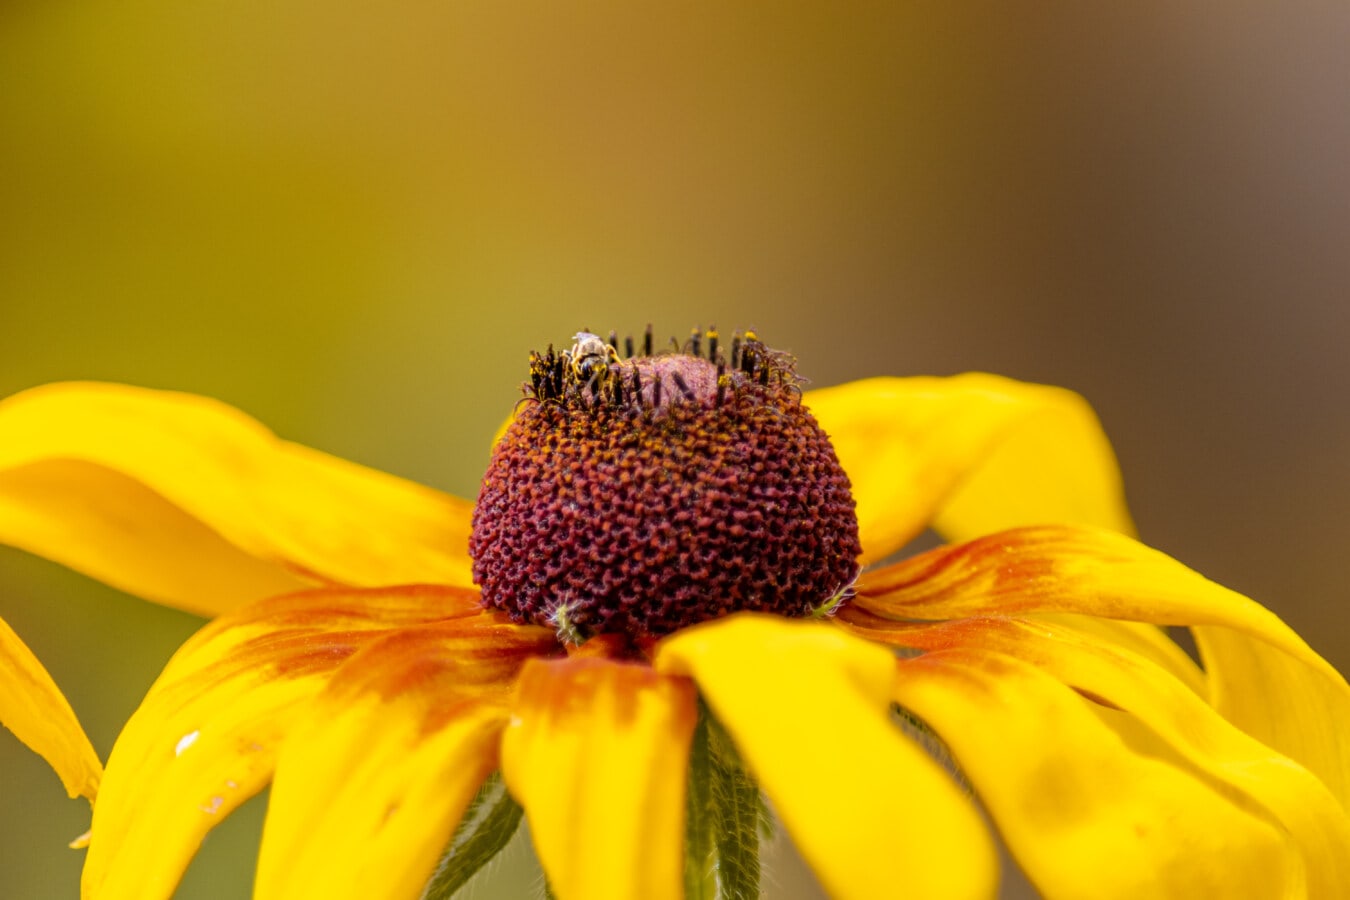 honeybee, small, pistil, pollen, orange yellow, flower, close-up, yellow, bee, insect